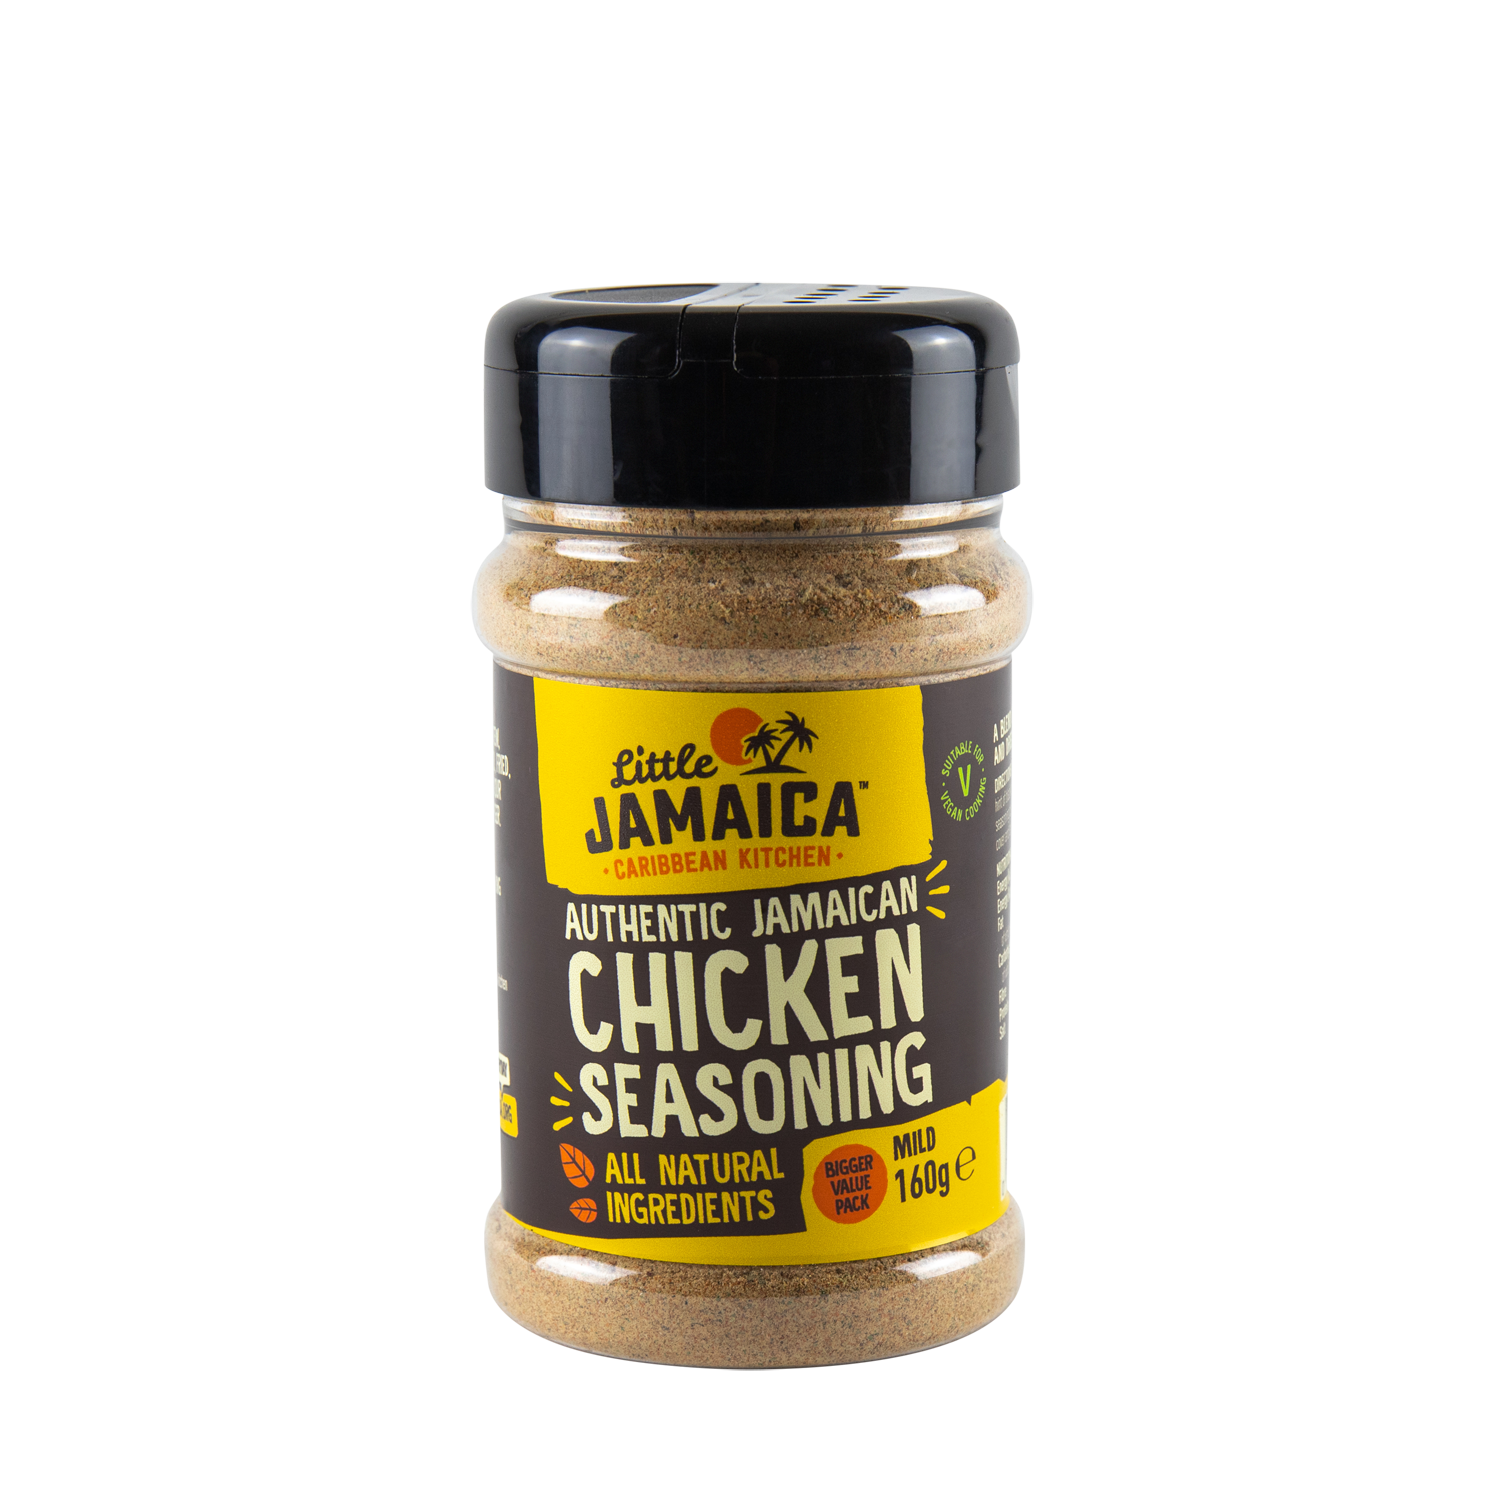 Authentic Jamaican Chicken Seasoning